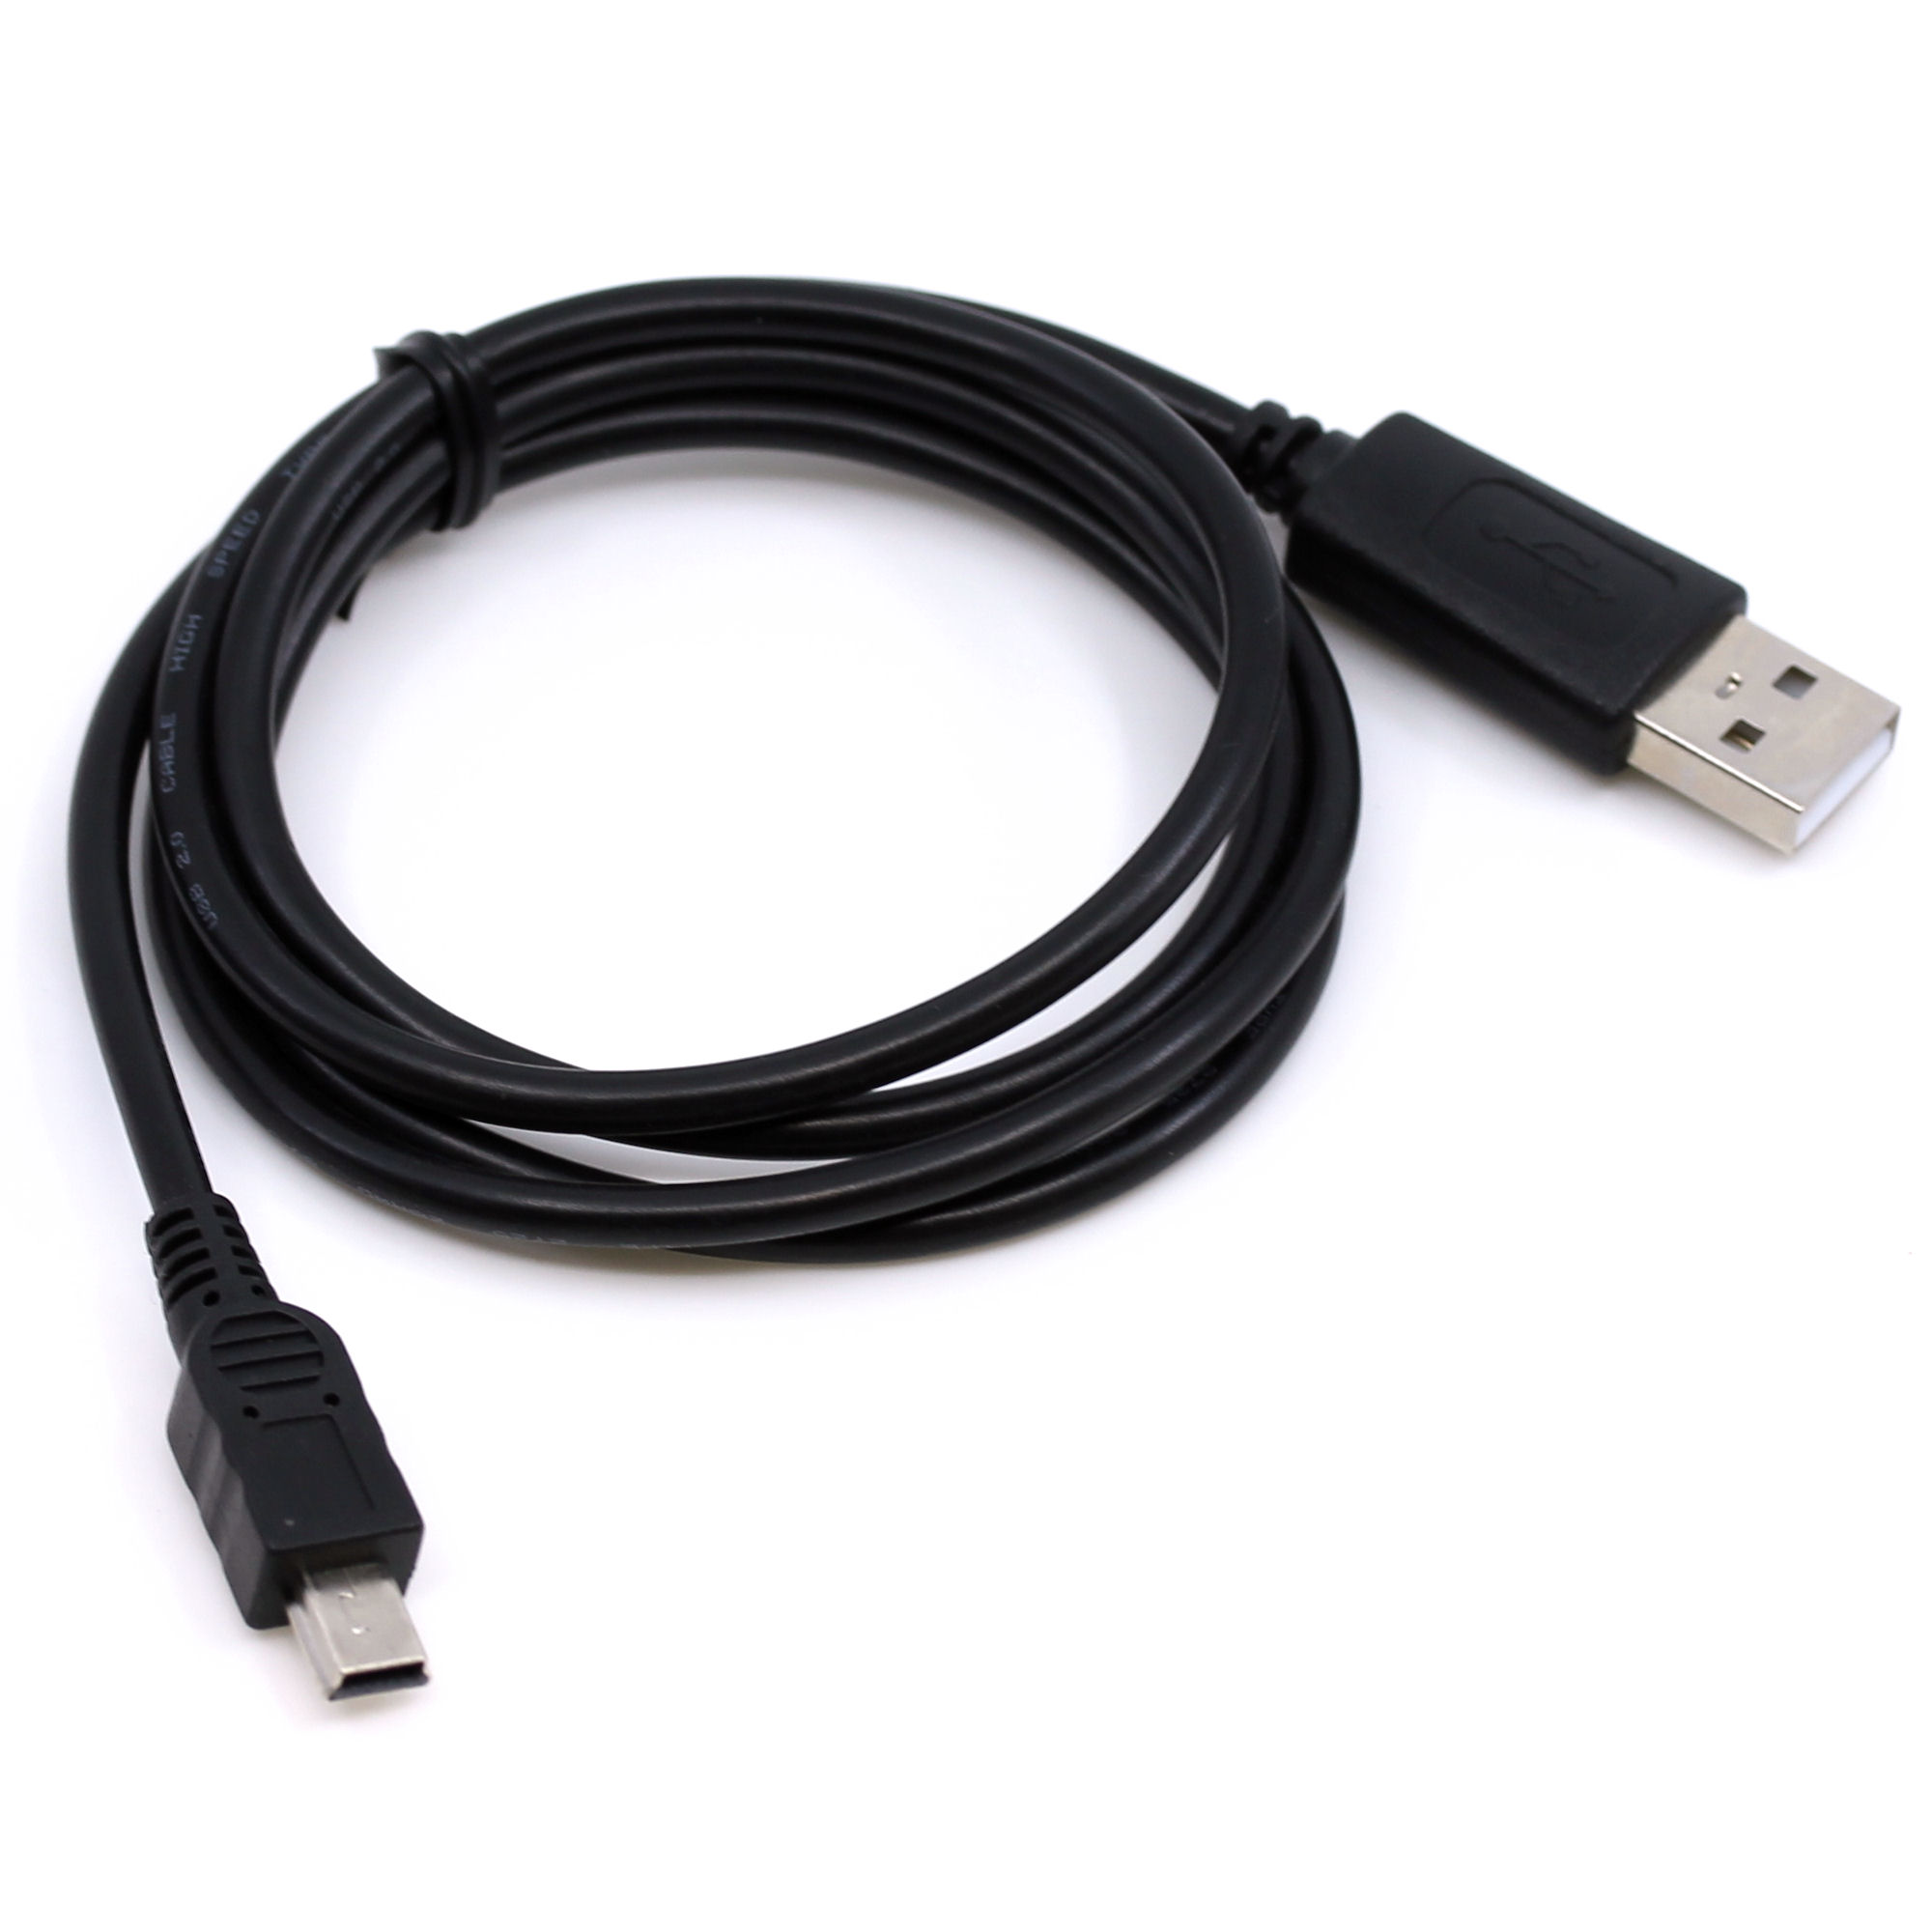 USB Datenkabel für Kyocera Finecam 3225, 3245, 3250, L3V, L4V, SL300R